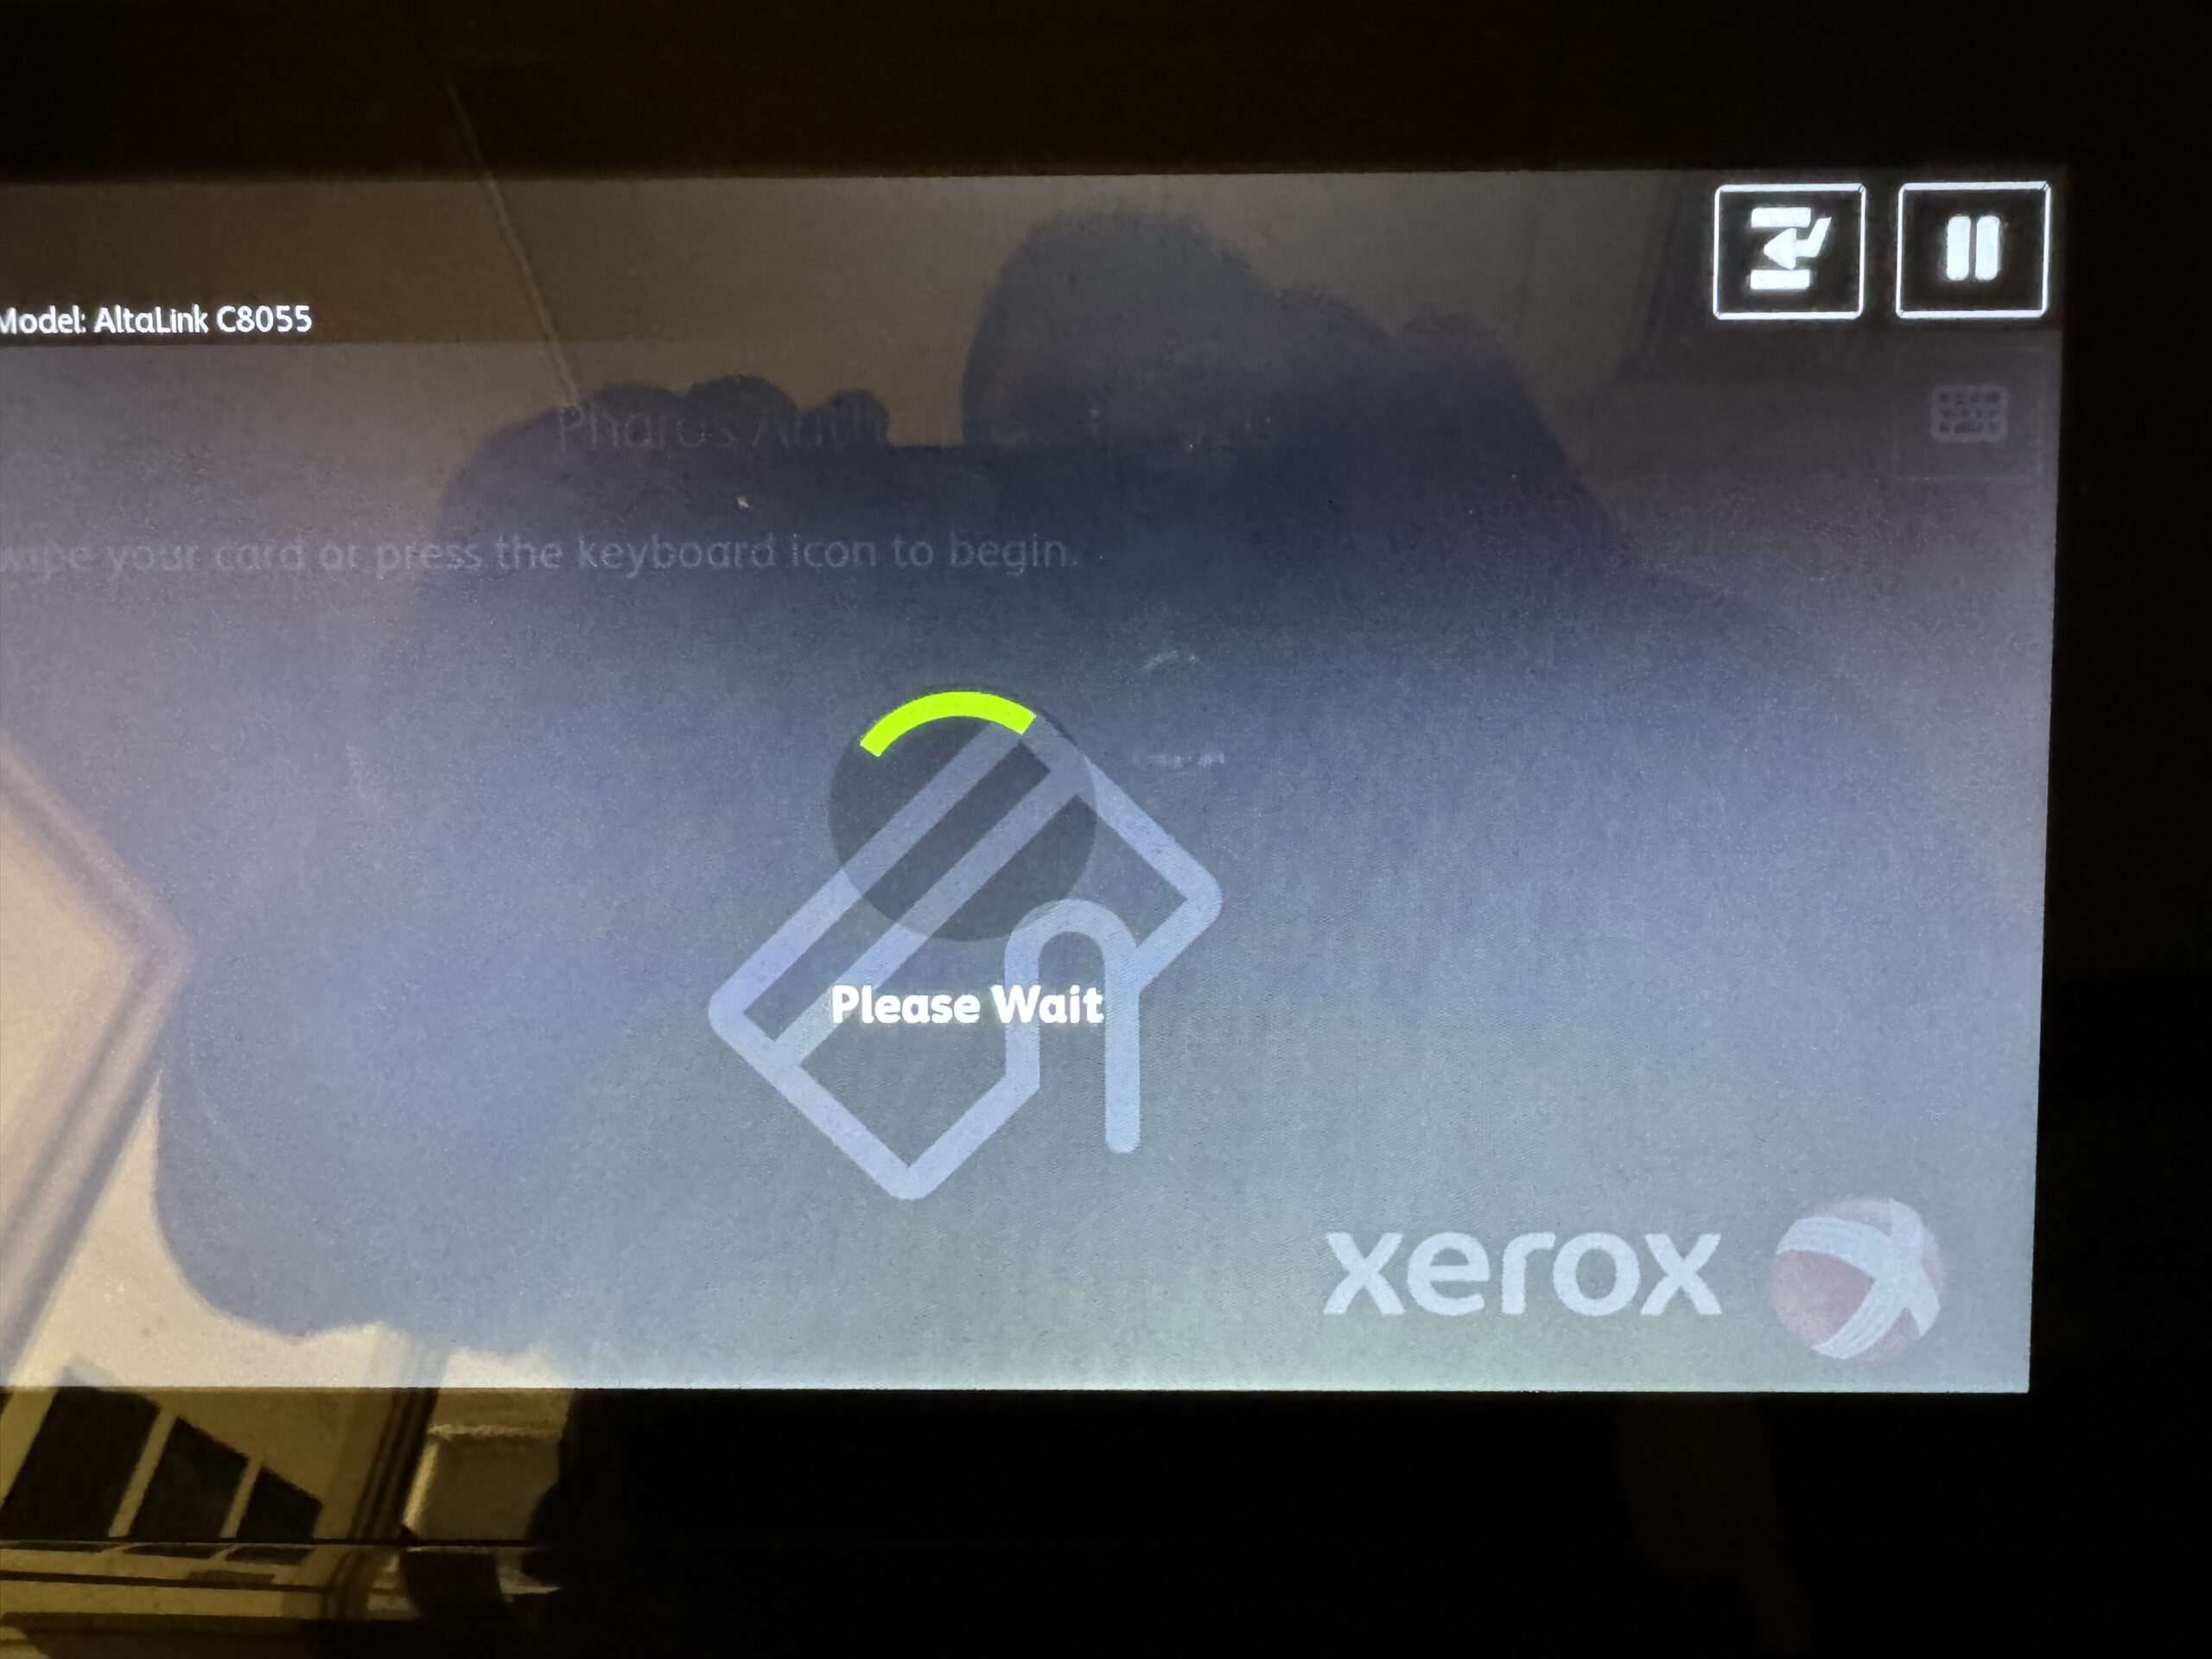 Picture of Xerox screen log in